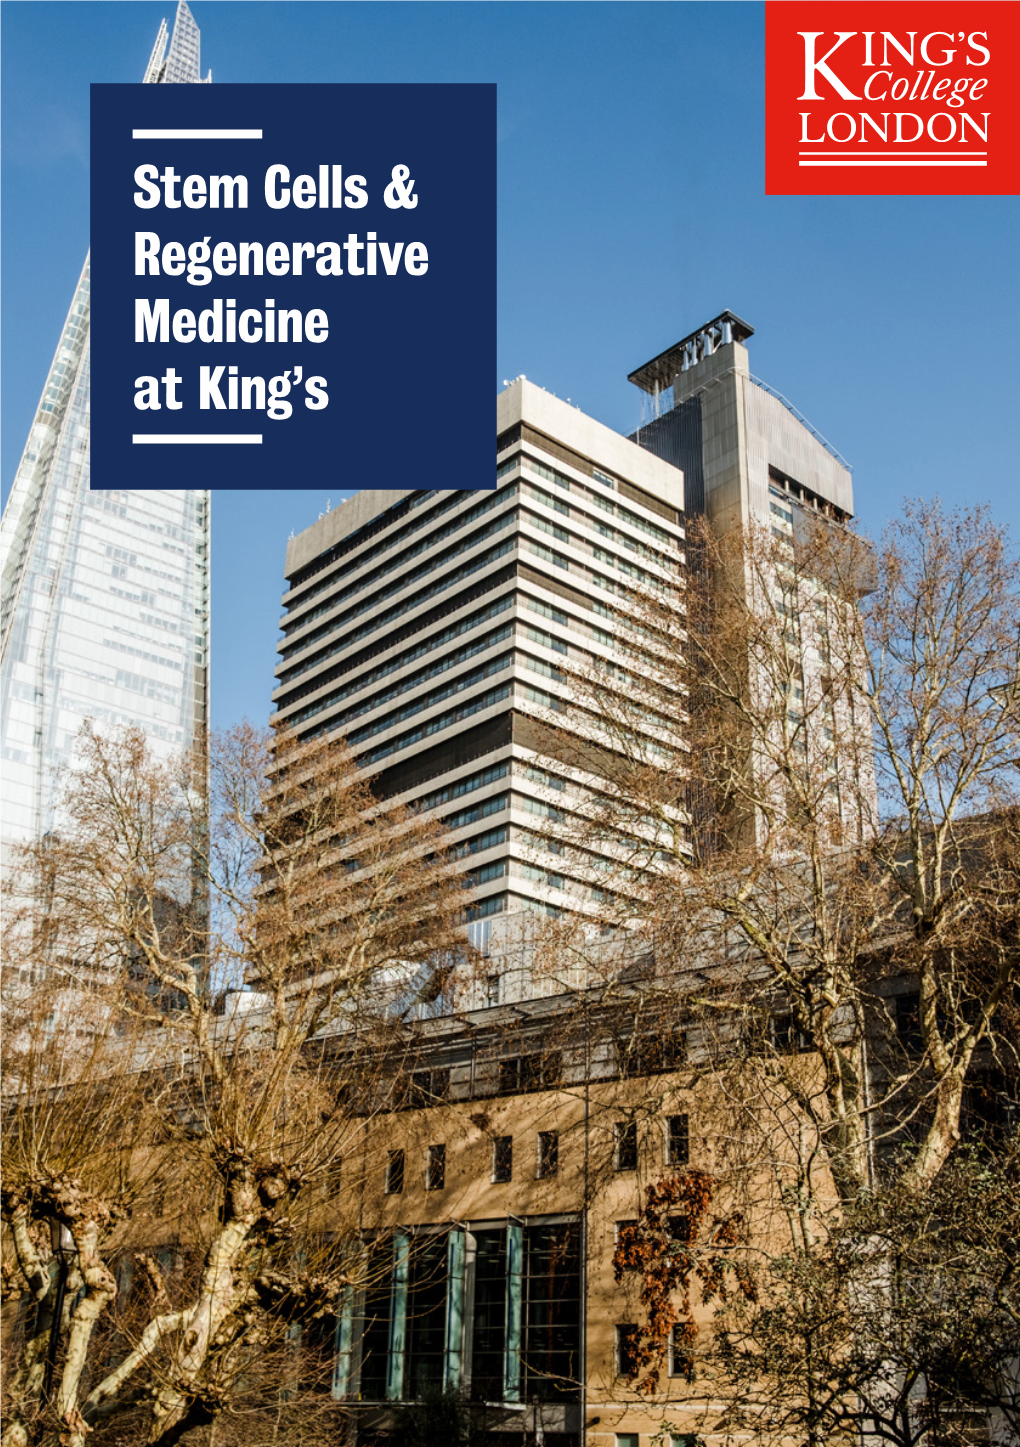 Stem Cells & Regenerative Medicine at King's